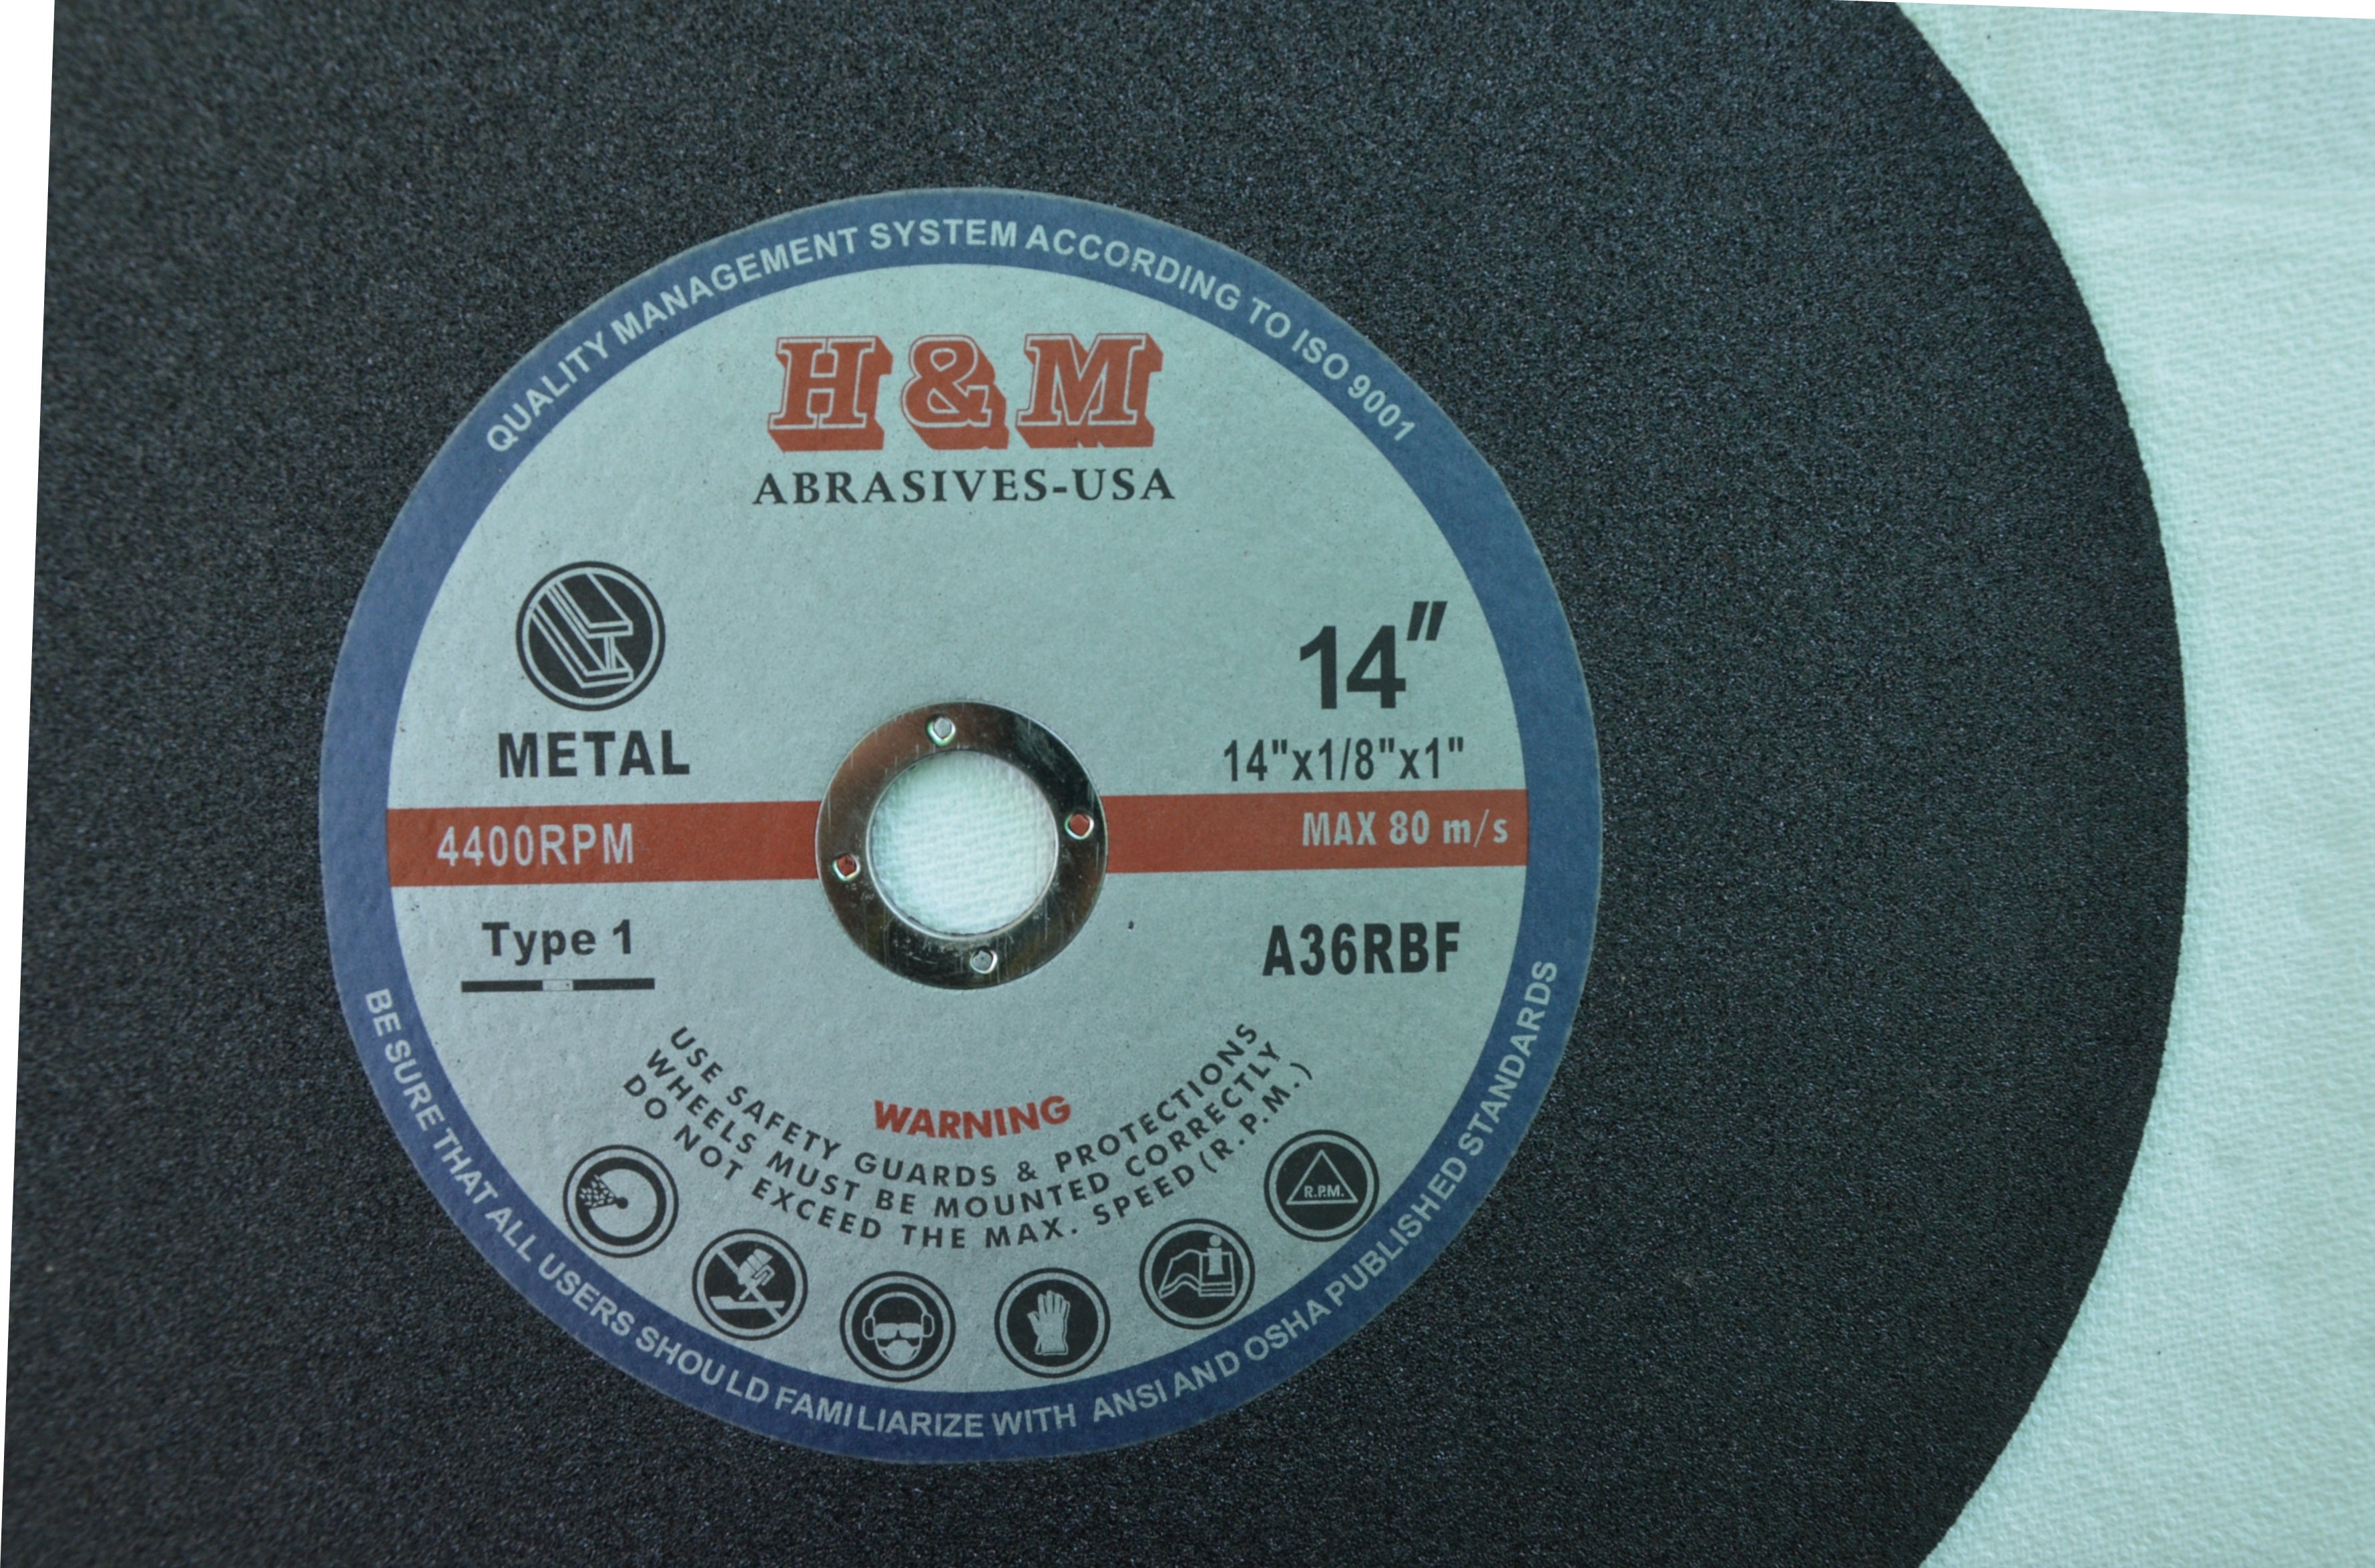 14" x 1/8" x 1" Metal CUT-OFF WHEELS chop saw blades – HM ABRASIVES-USA